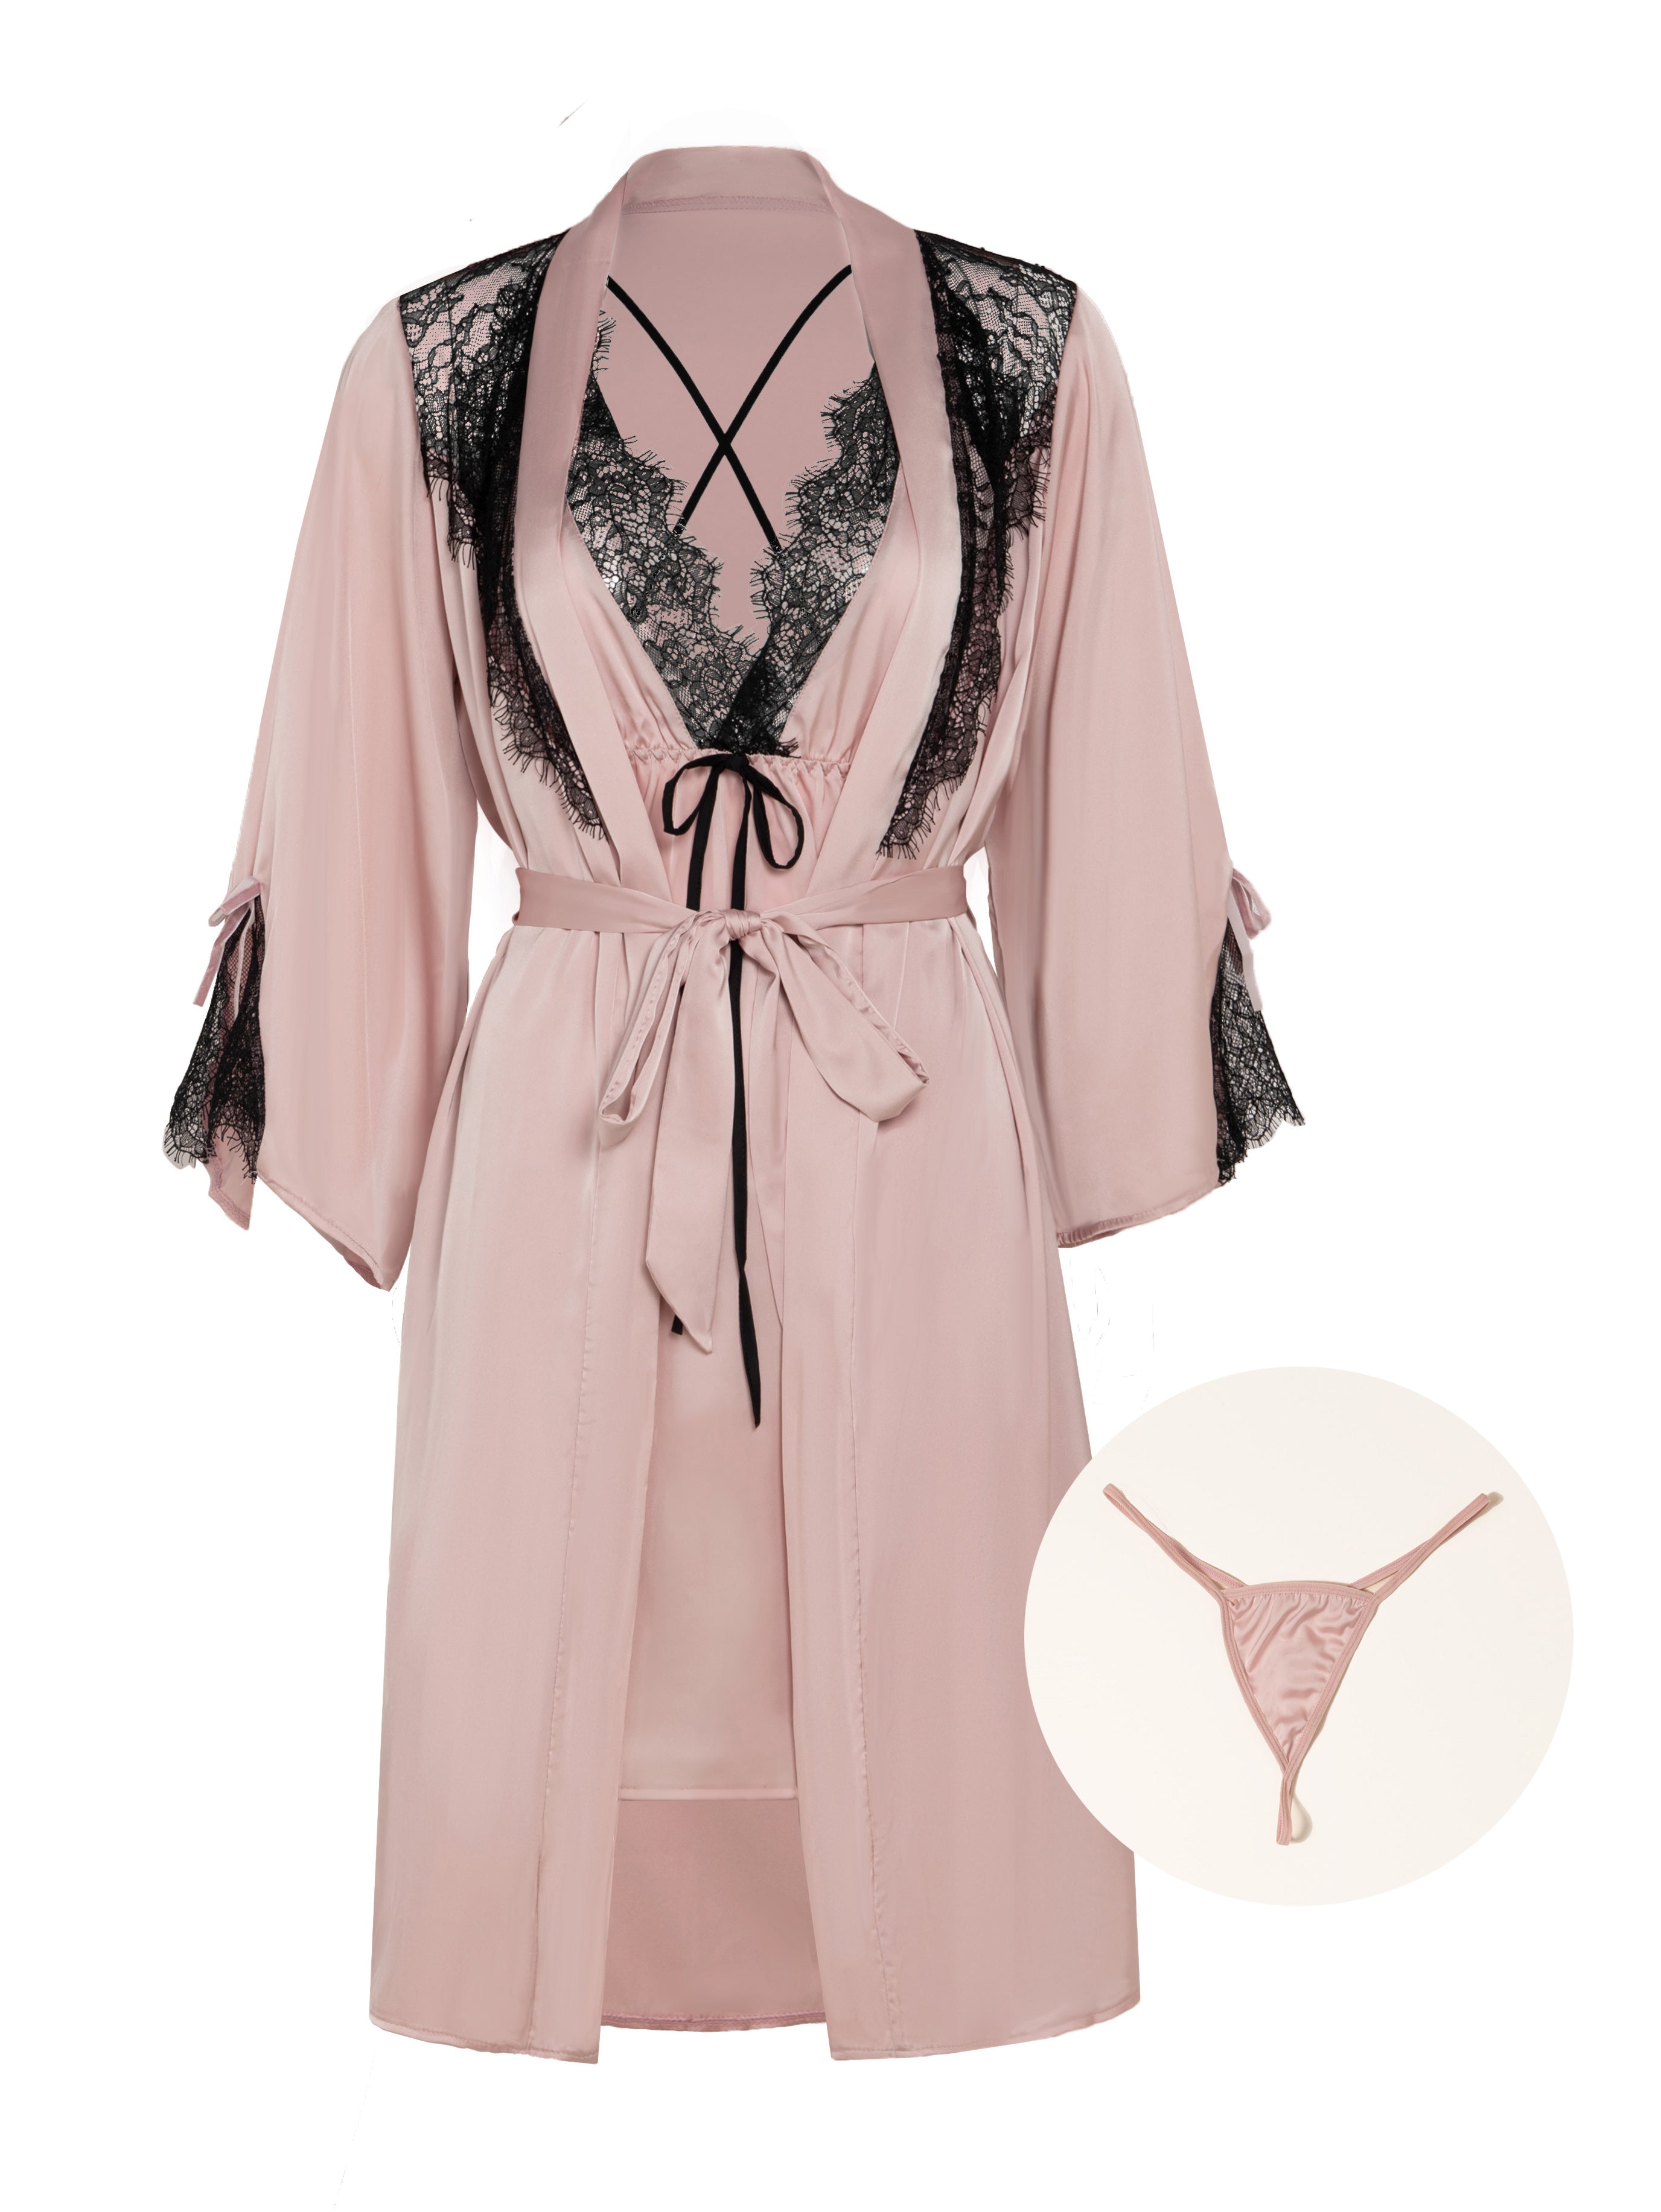 Women Satin 2PCS Pajamas Sets Lace Nightgown Sleepwear with G-String Sai Feel